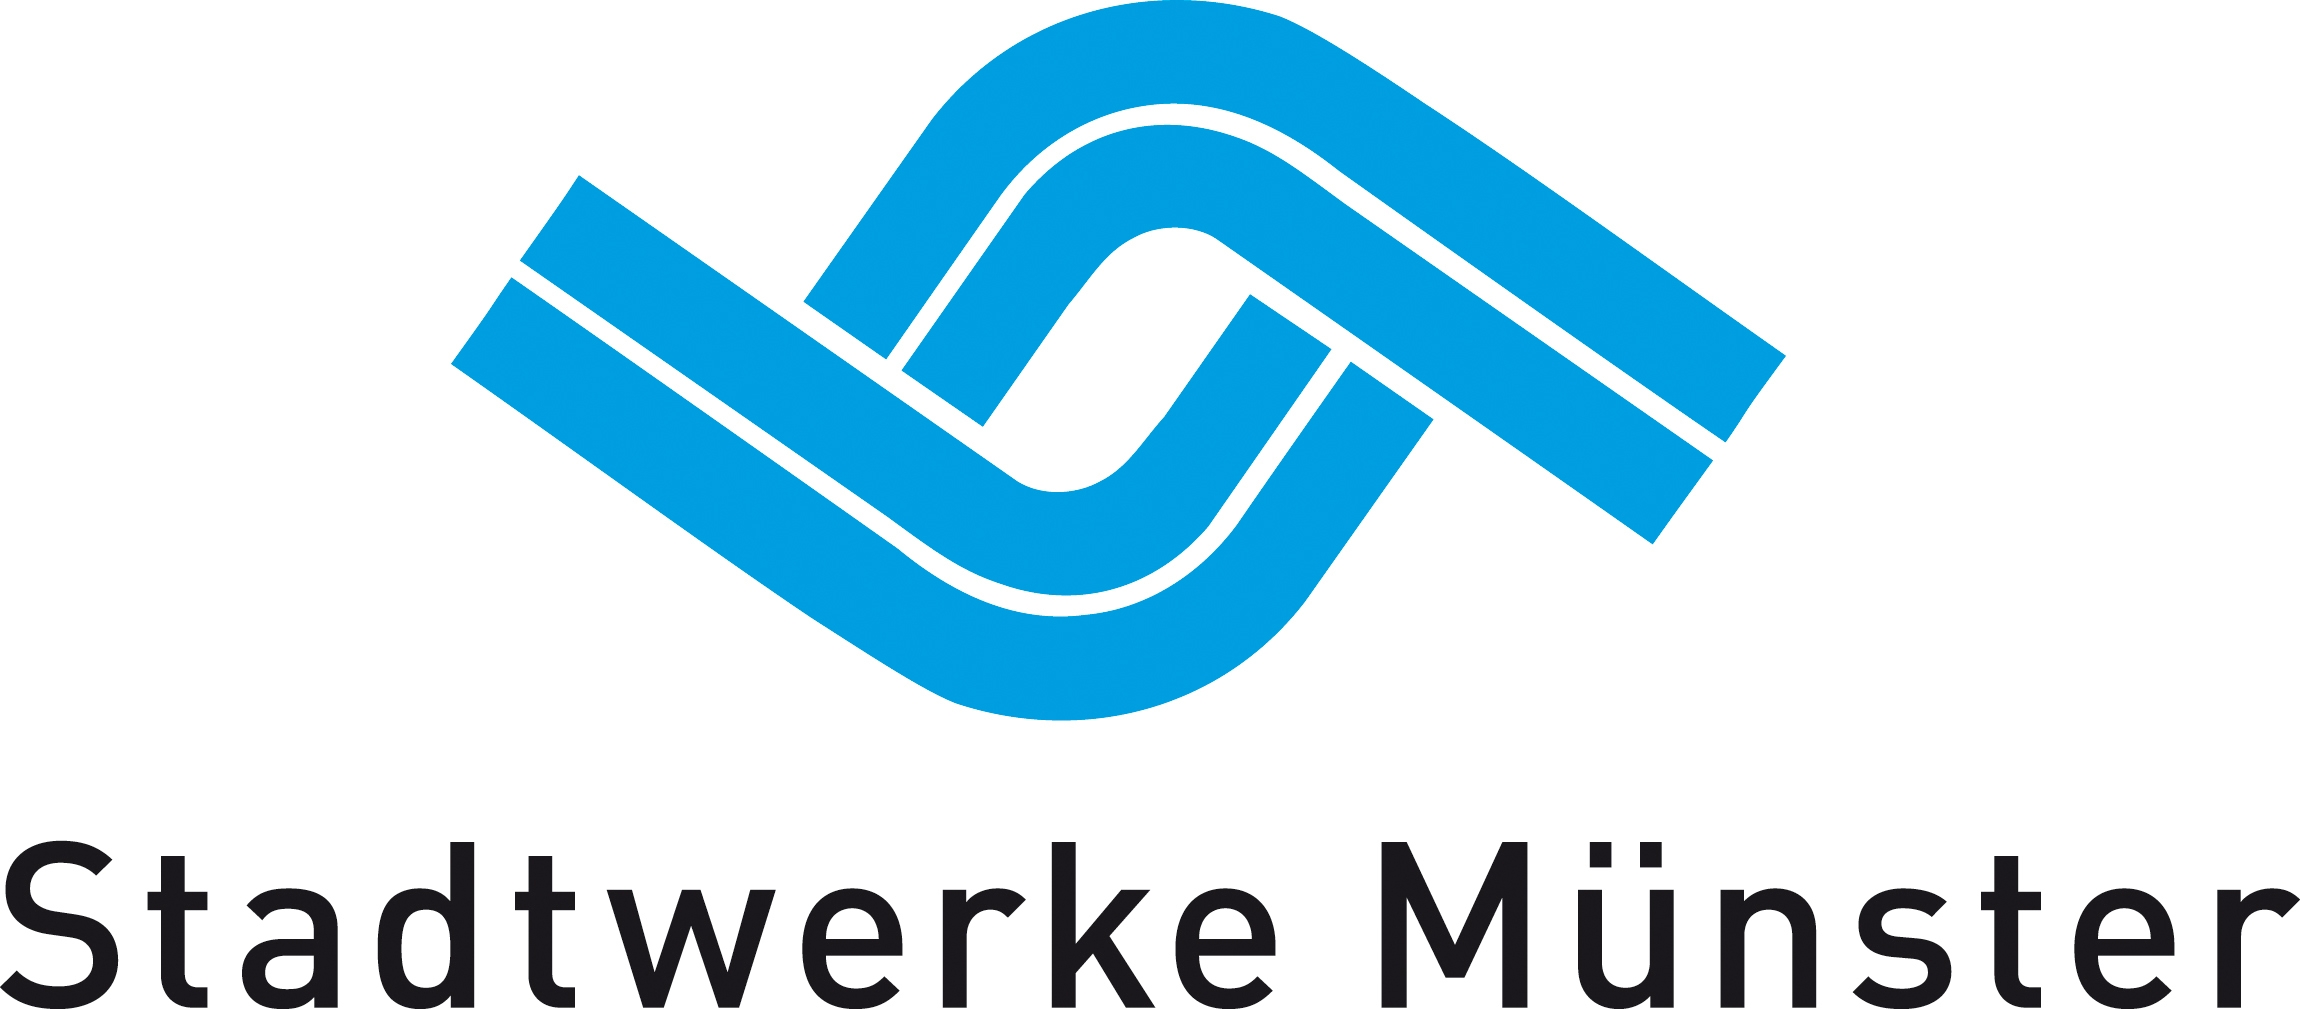 Stadtwerke Münster